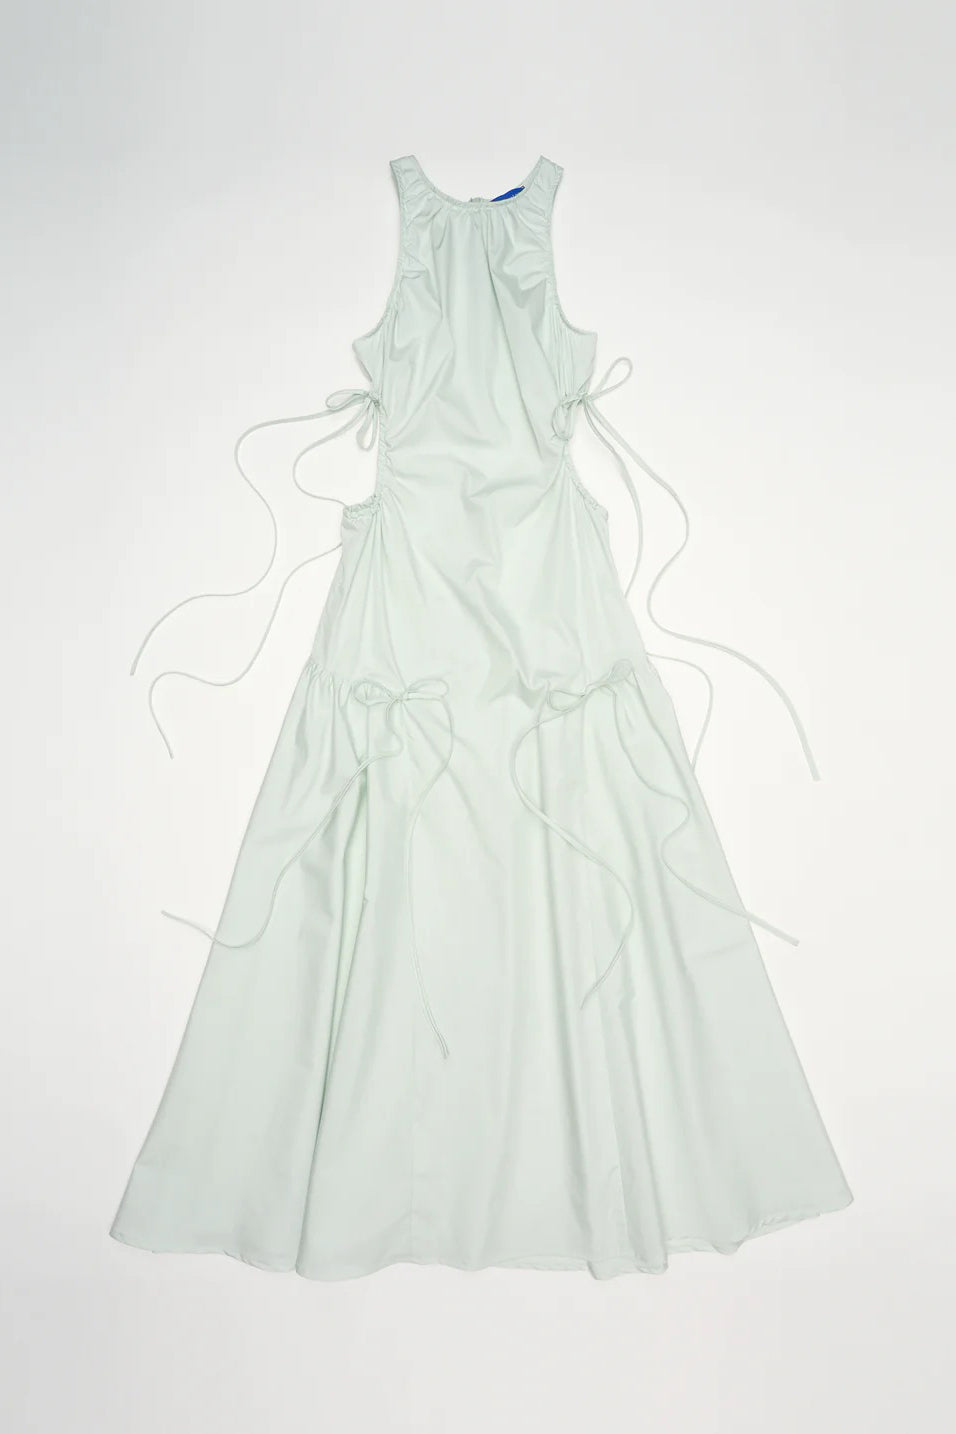 PV Fantasy Dress // Seaglass